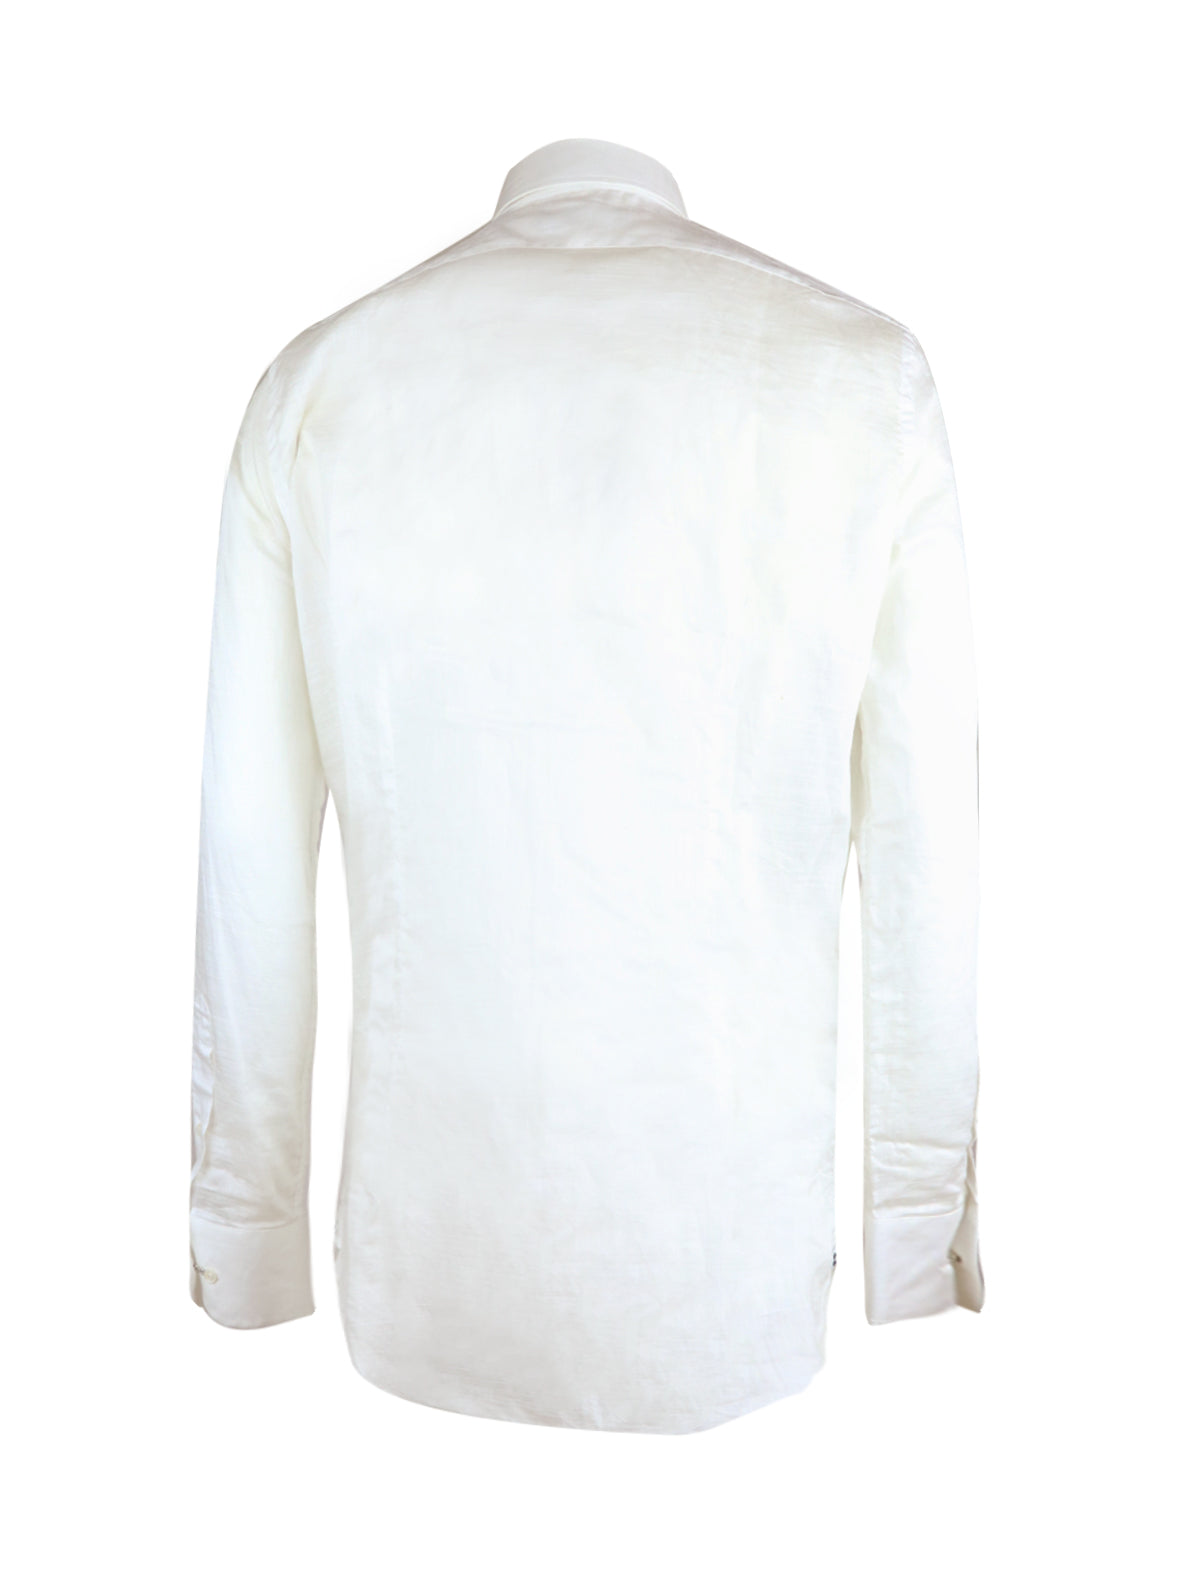 Lardini Cotton-Flax Shirt in Sheer White